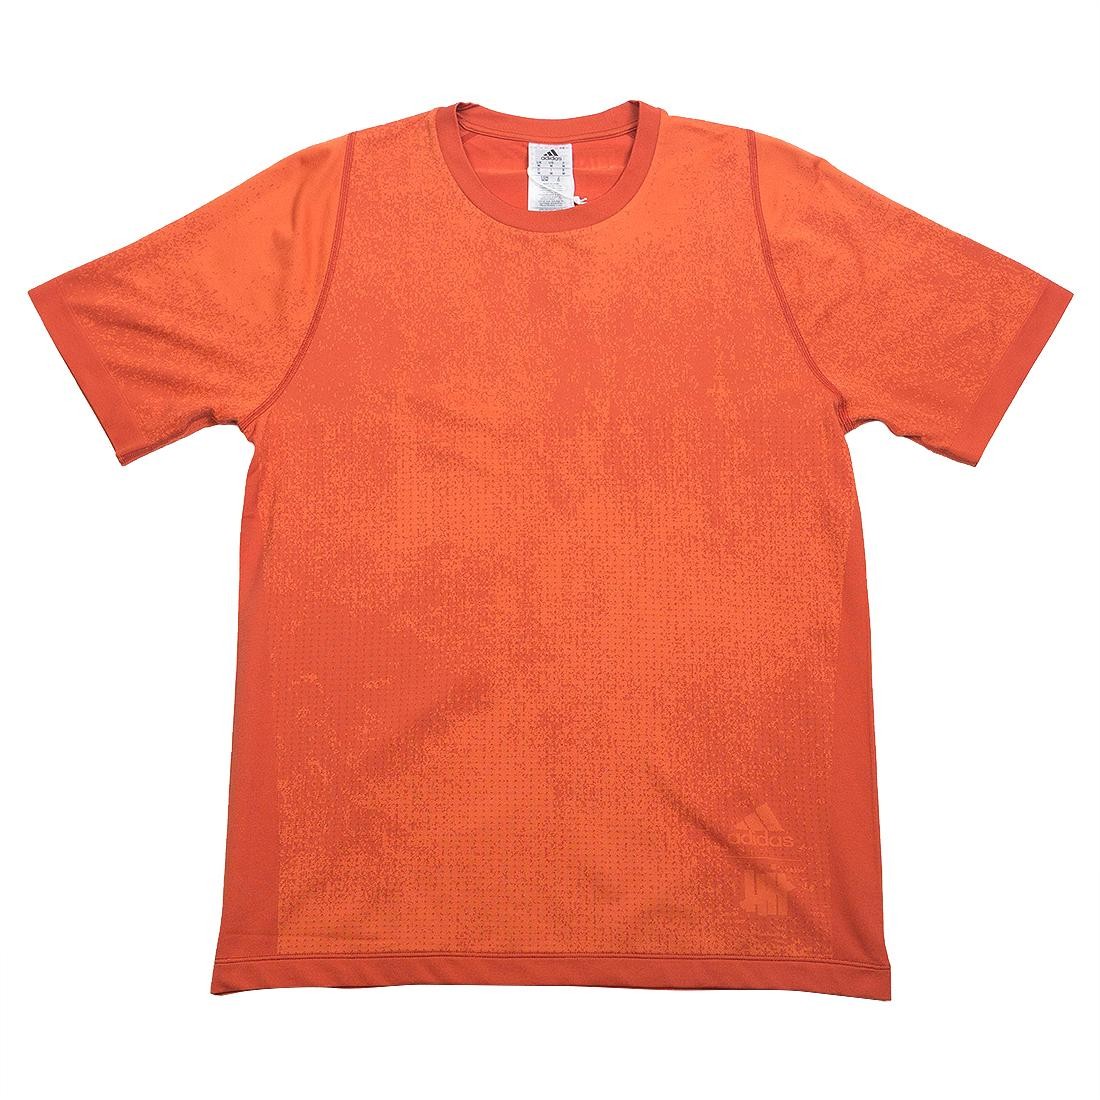 Adidas x Undefeated Men Knit Tee (orange)